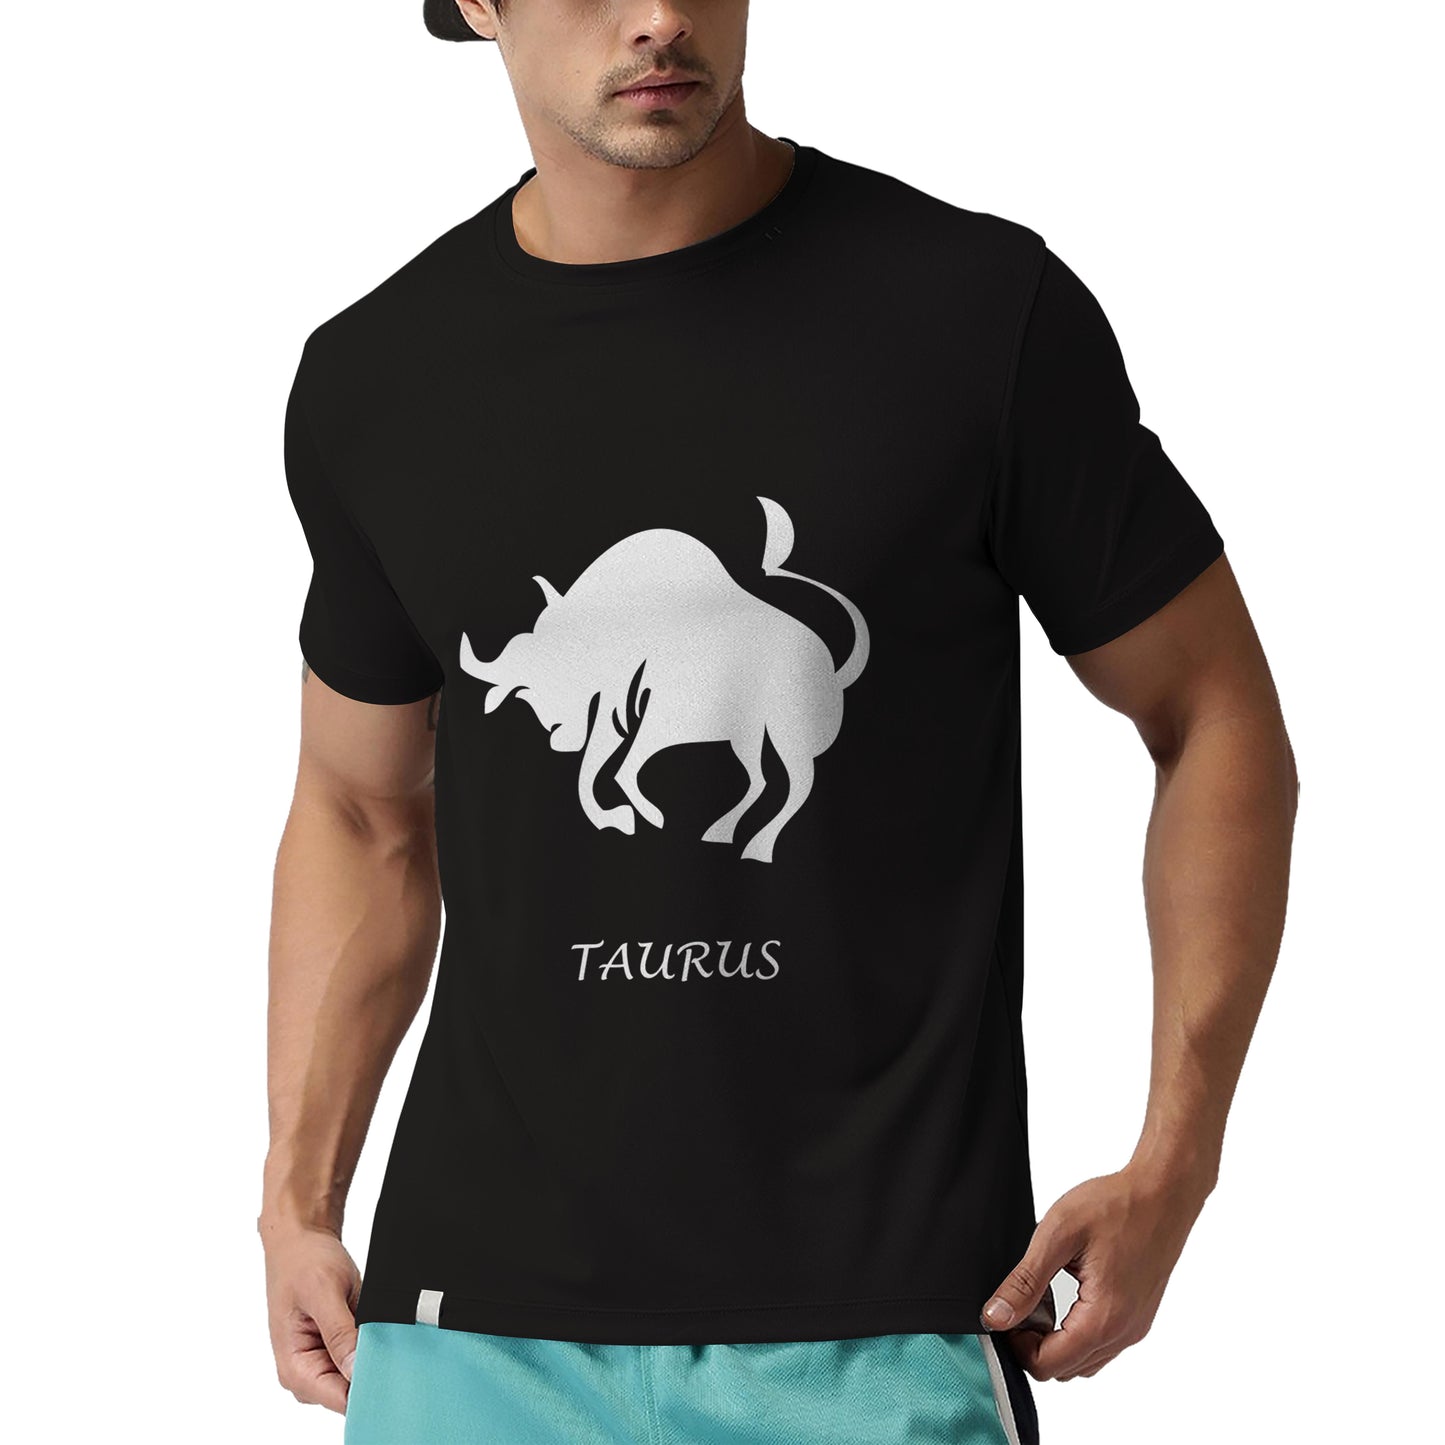 iberry's  Taurus zodiac sign tshirt for Men | zodiac sign tshirt |Birthday Tshirts |Half Sleeve tshirt | Round Neck T Shirt |Unisex cotton tshirts